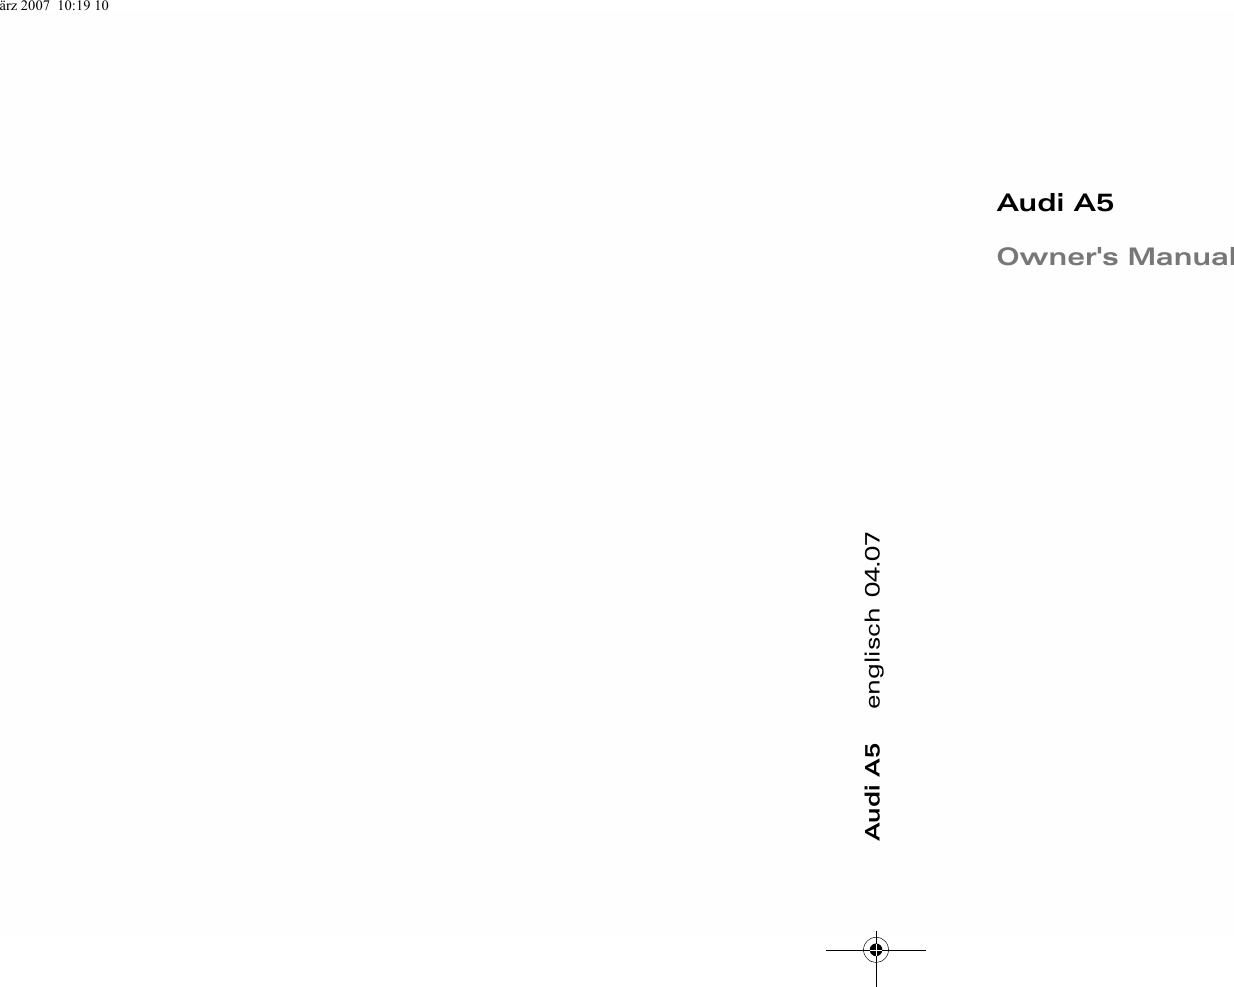 Audi A5   englisch 04.07Audi A5  Owner&apos;s Manualärz 2007  10:19 10